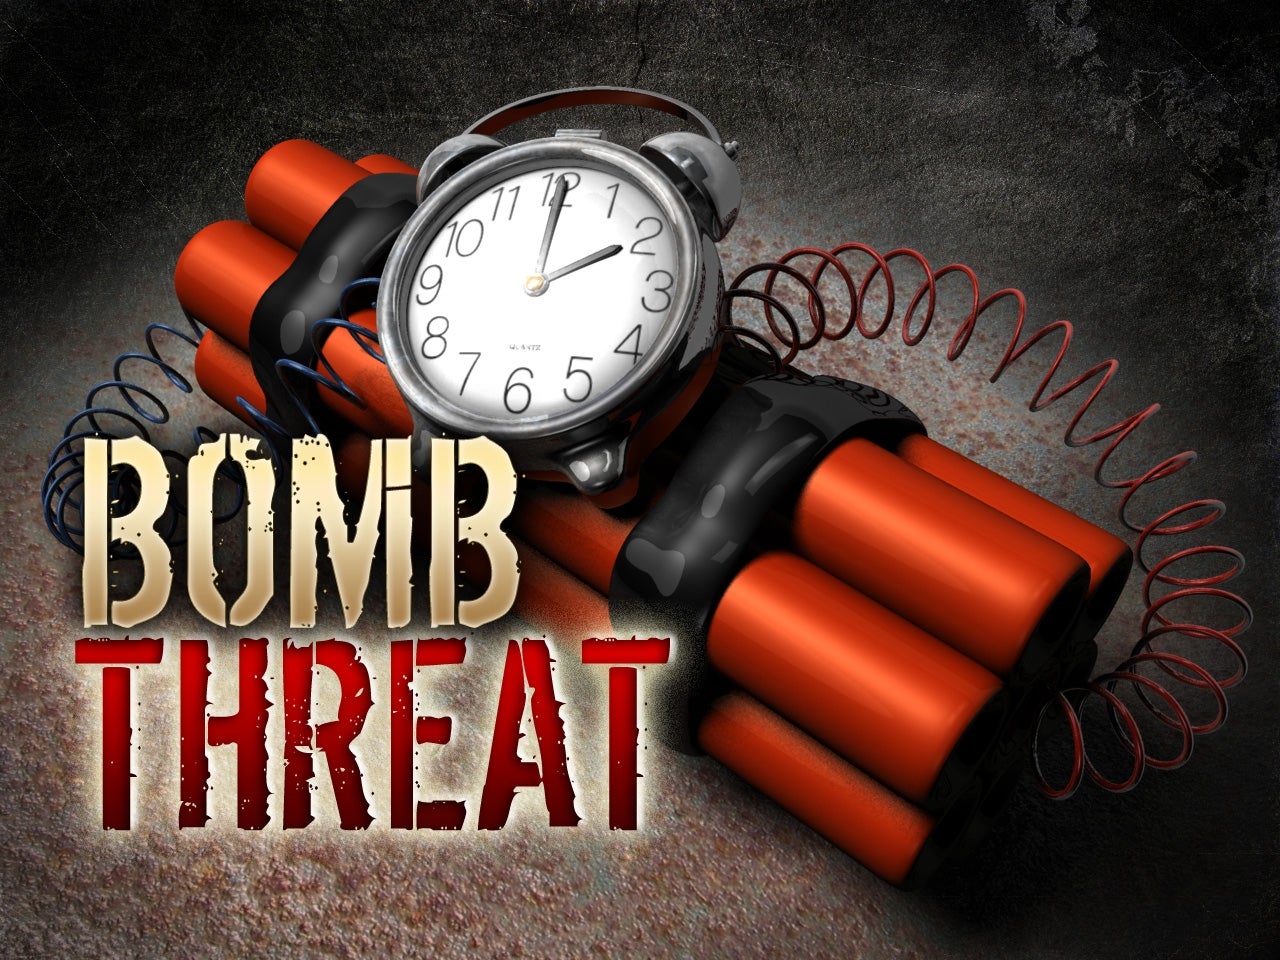 Image for Bomb threat sent to GDC 2014 Organizers over Anita Sarkeesian award